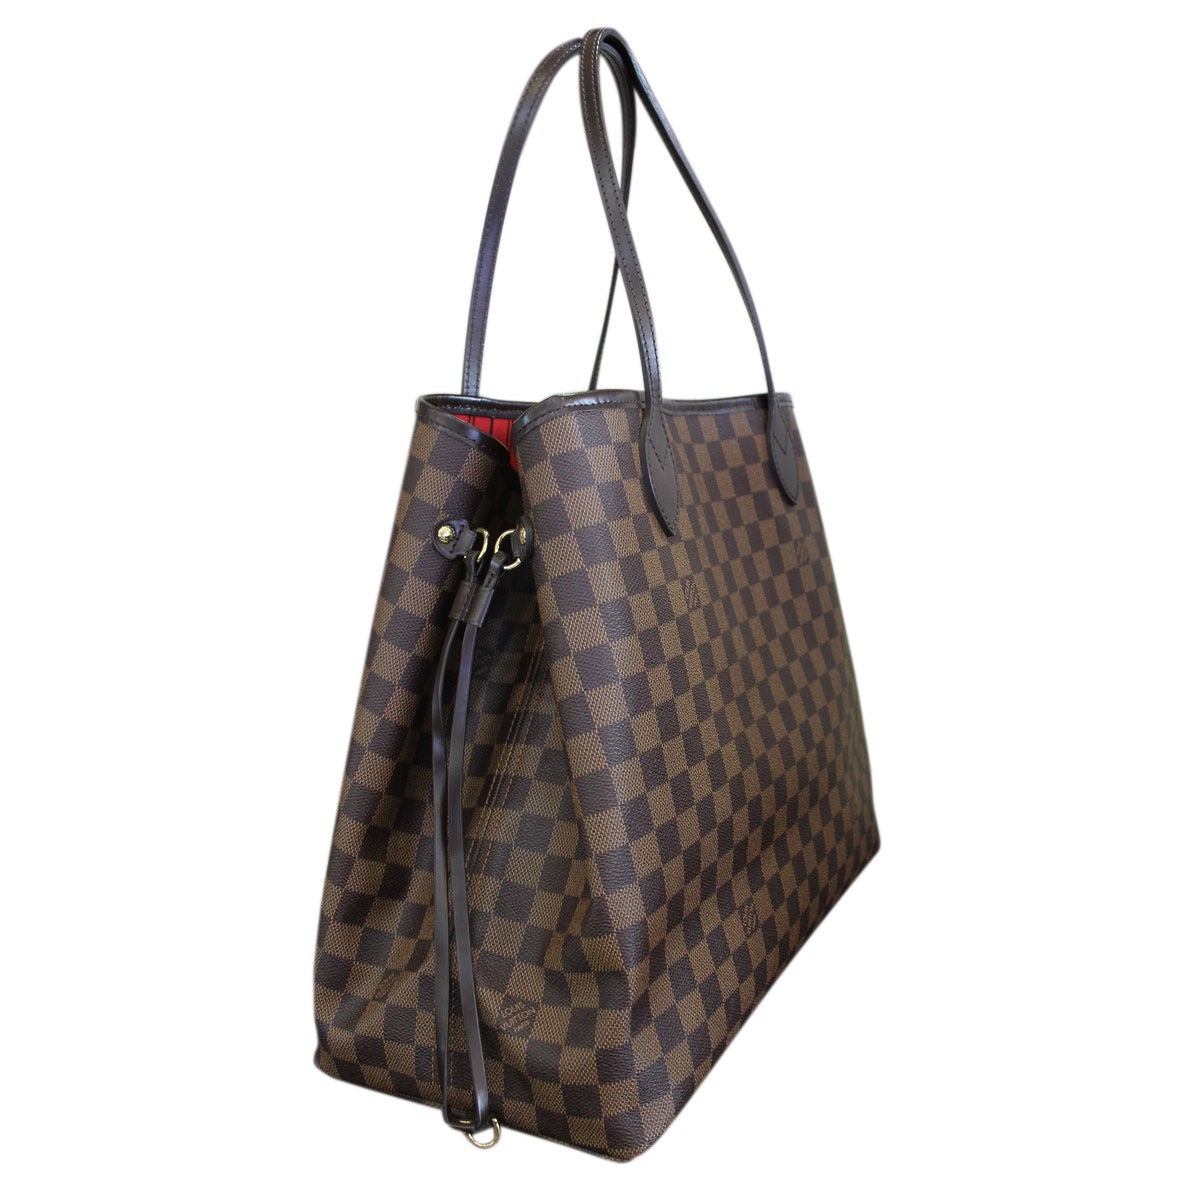 Louis Vuitton Neverfull GM Damier Ebene Tote Handbag in Box image 3